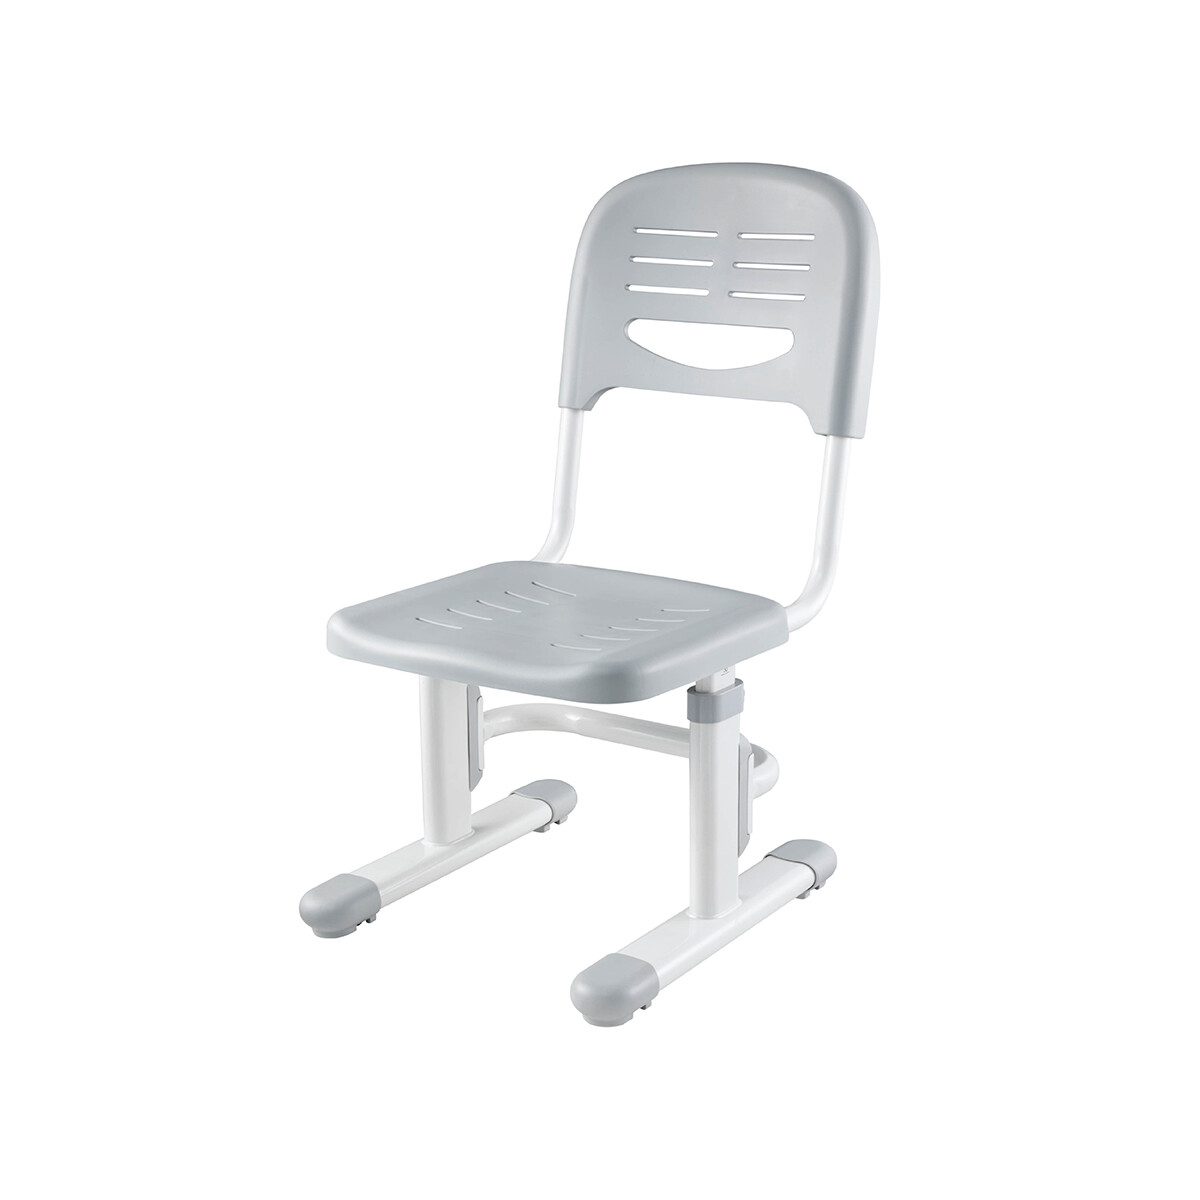 Kidomate Advanced Study Chair for Kids - Grey